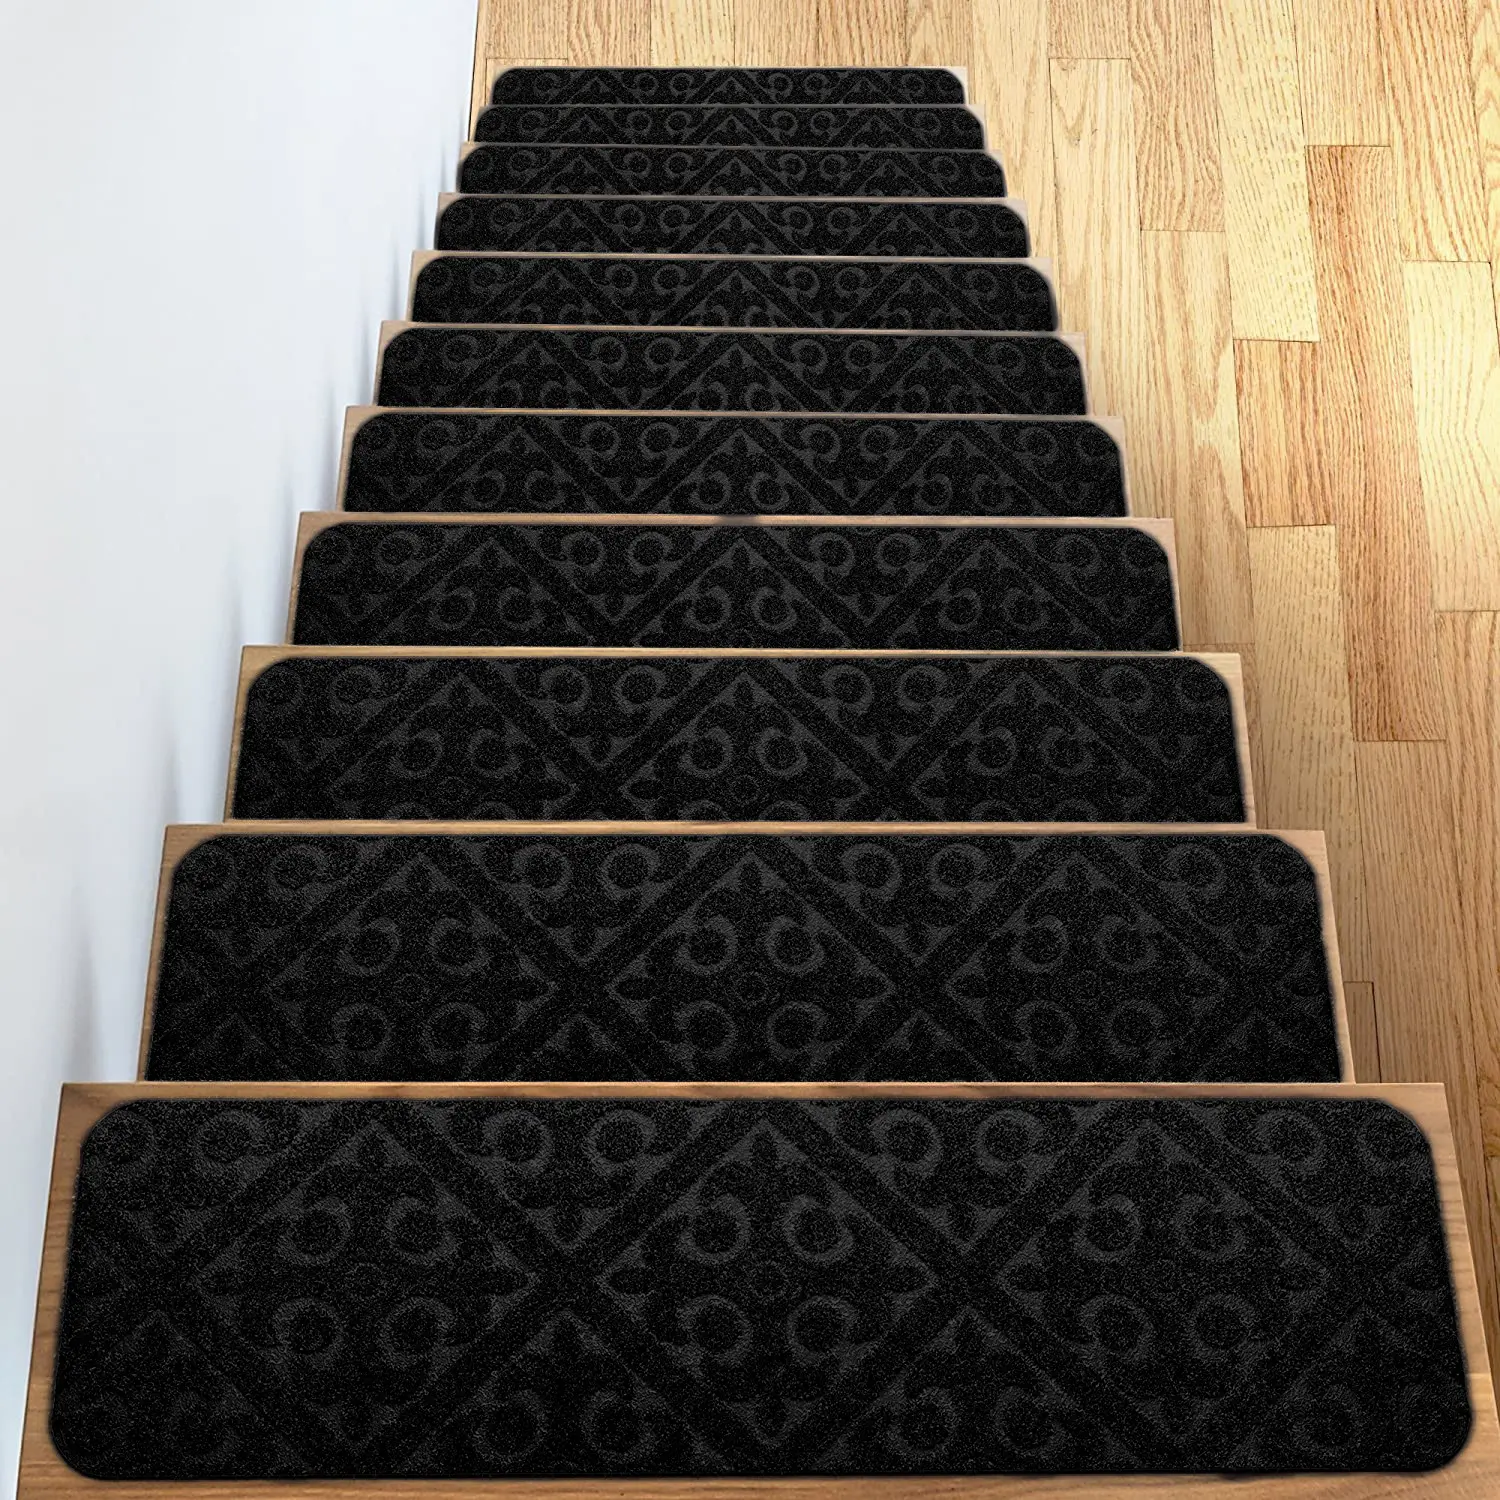 गर्म गोंद-मुक्त स्व-चिपकने वाली सीढ़ी मैट को एम्बेड गैर-स्लिप ट्रेड मैट स्कर्स गंदगी प्रतिरोधी फर्श मैट